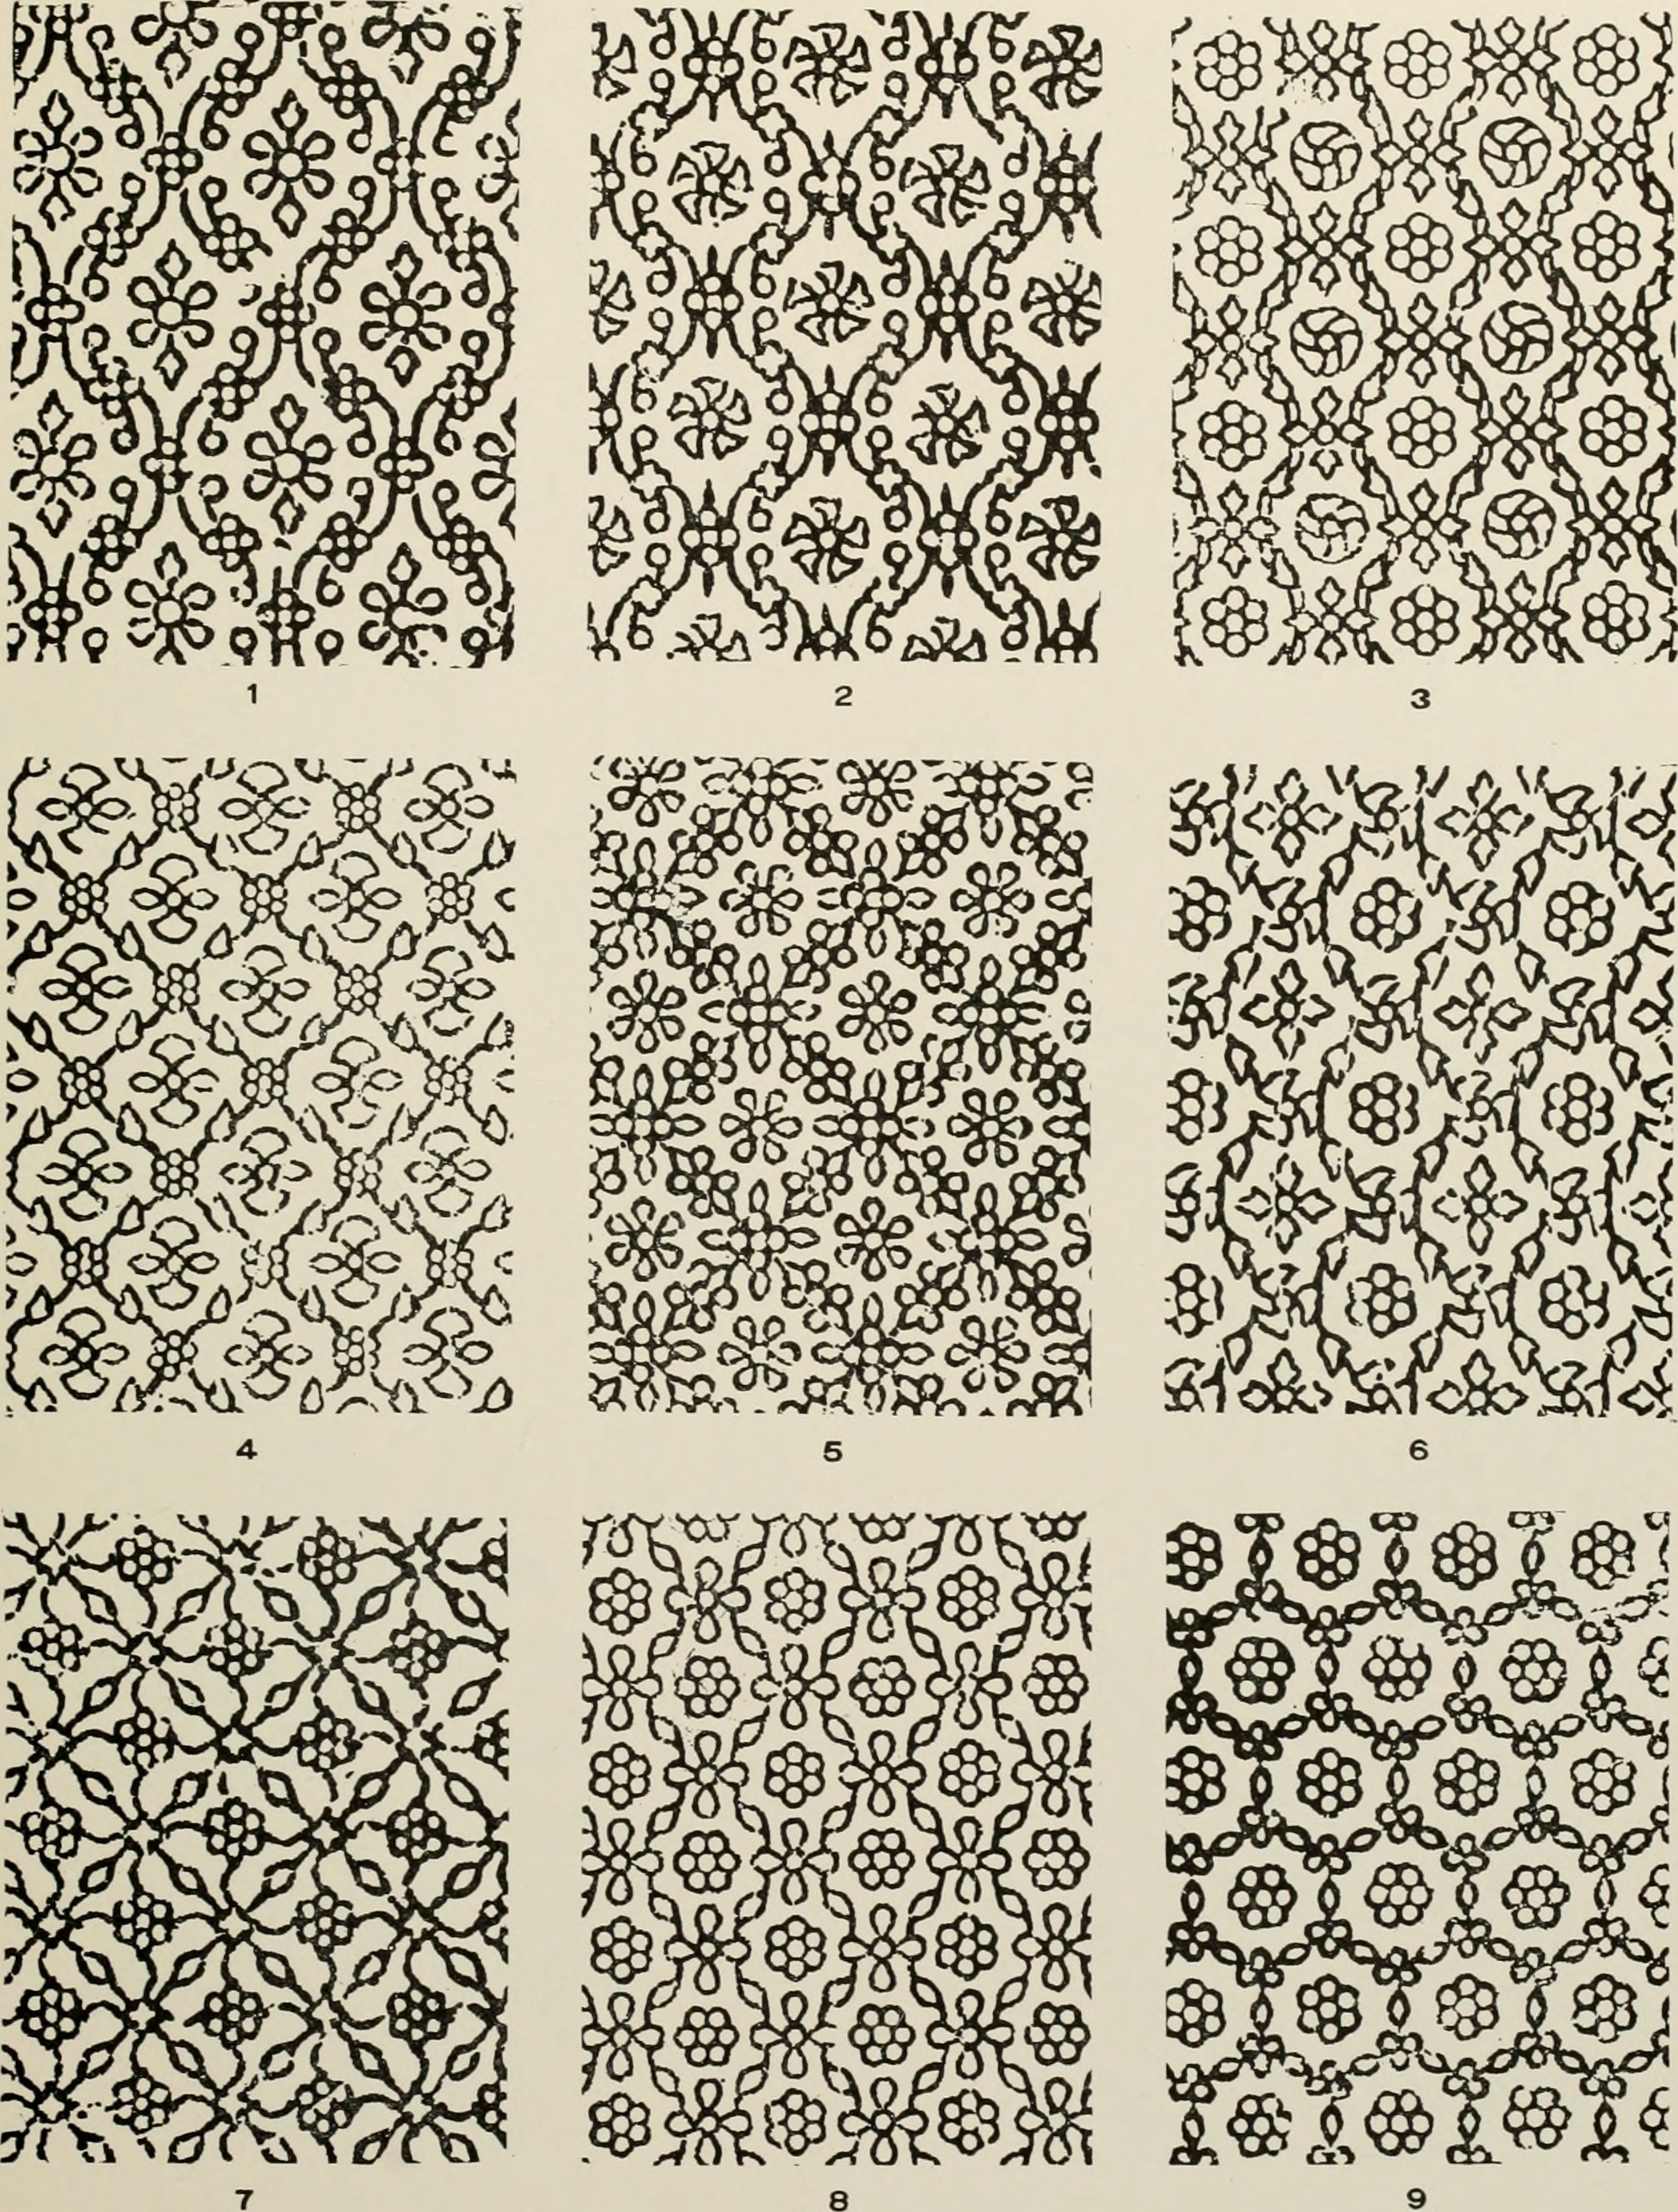 Indian Block-Printed Textiles: Past and Present - The Metropolitan